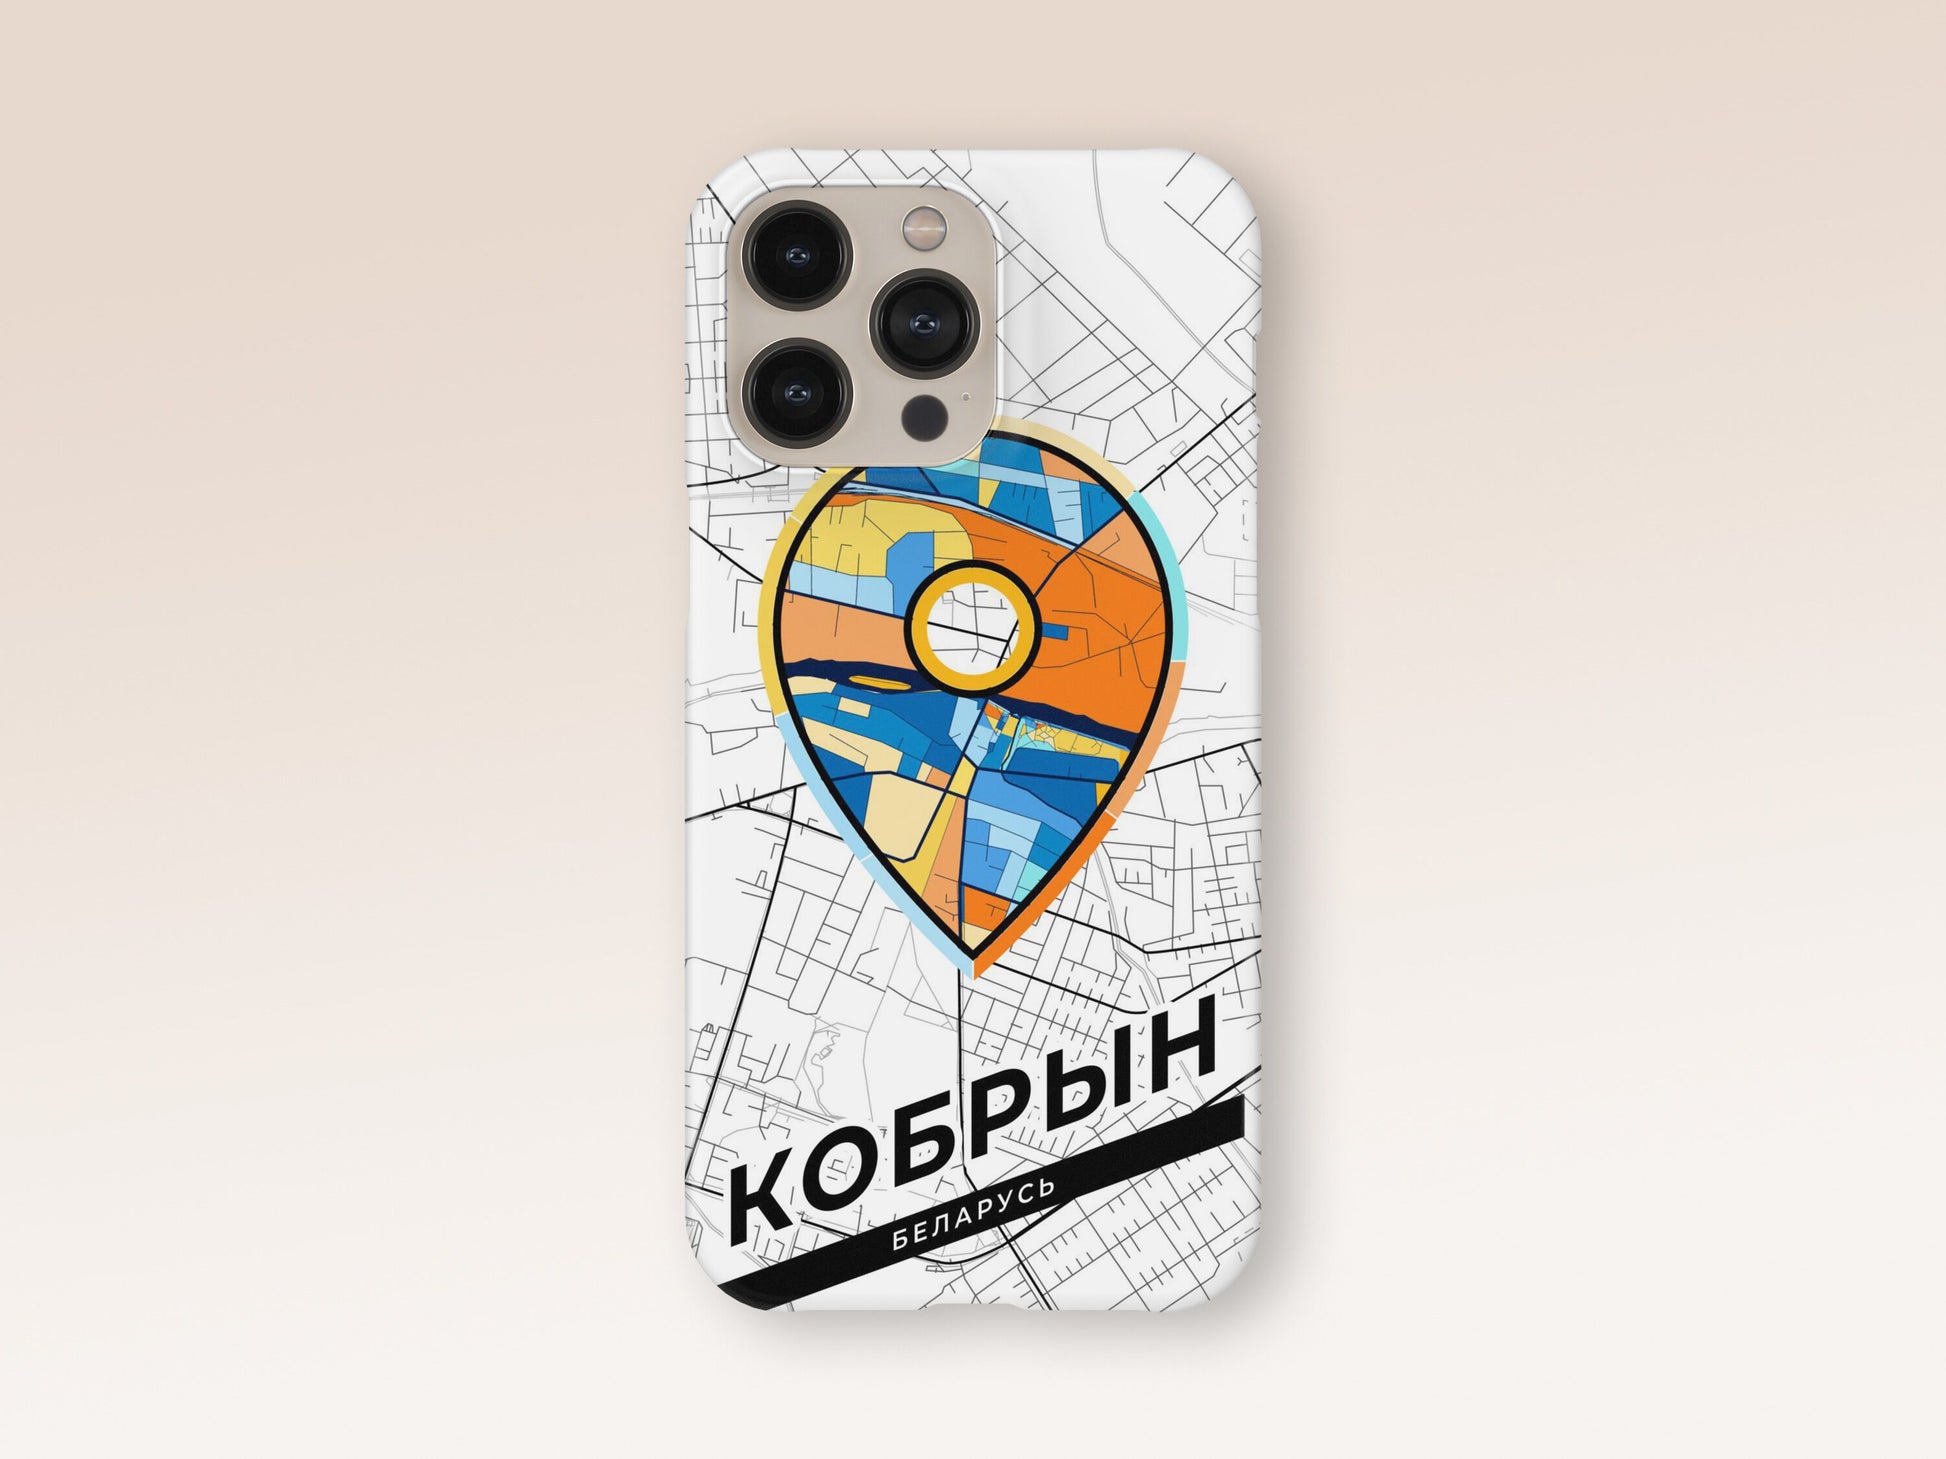 Кобрын Беларусь slim phone case with colorful icon. Birthday, wedding or housewarming gift. Couple match cases. 1